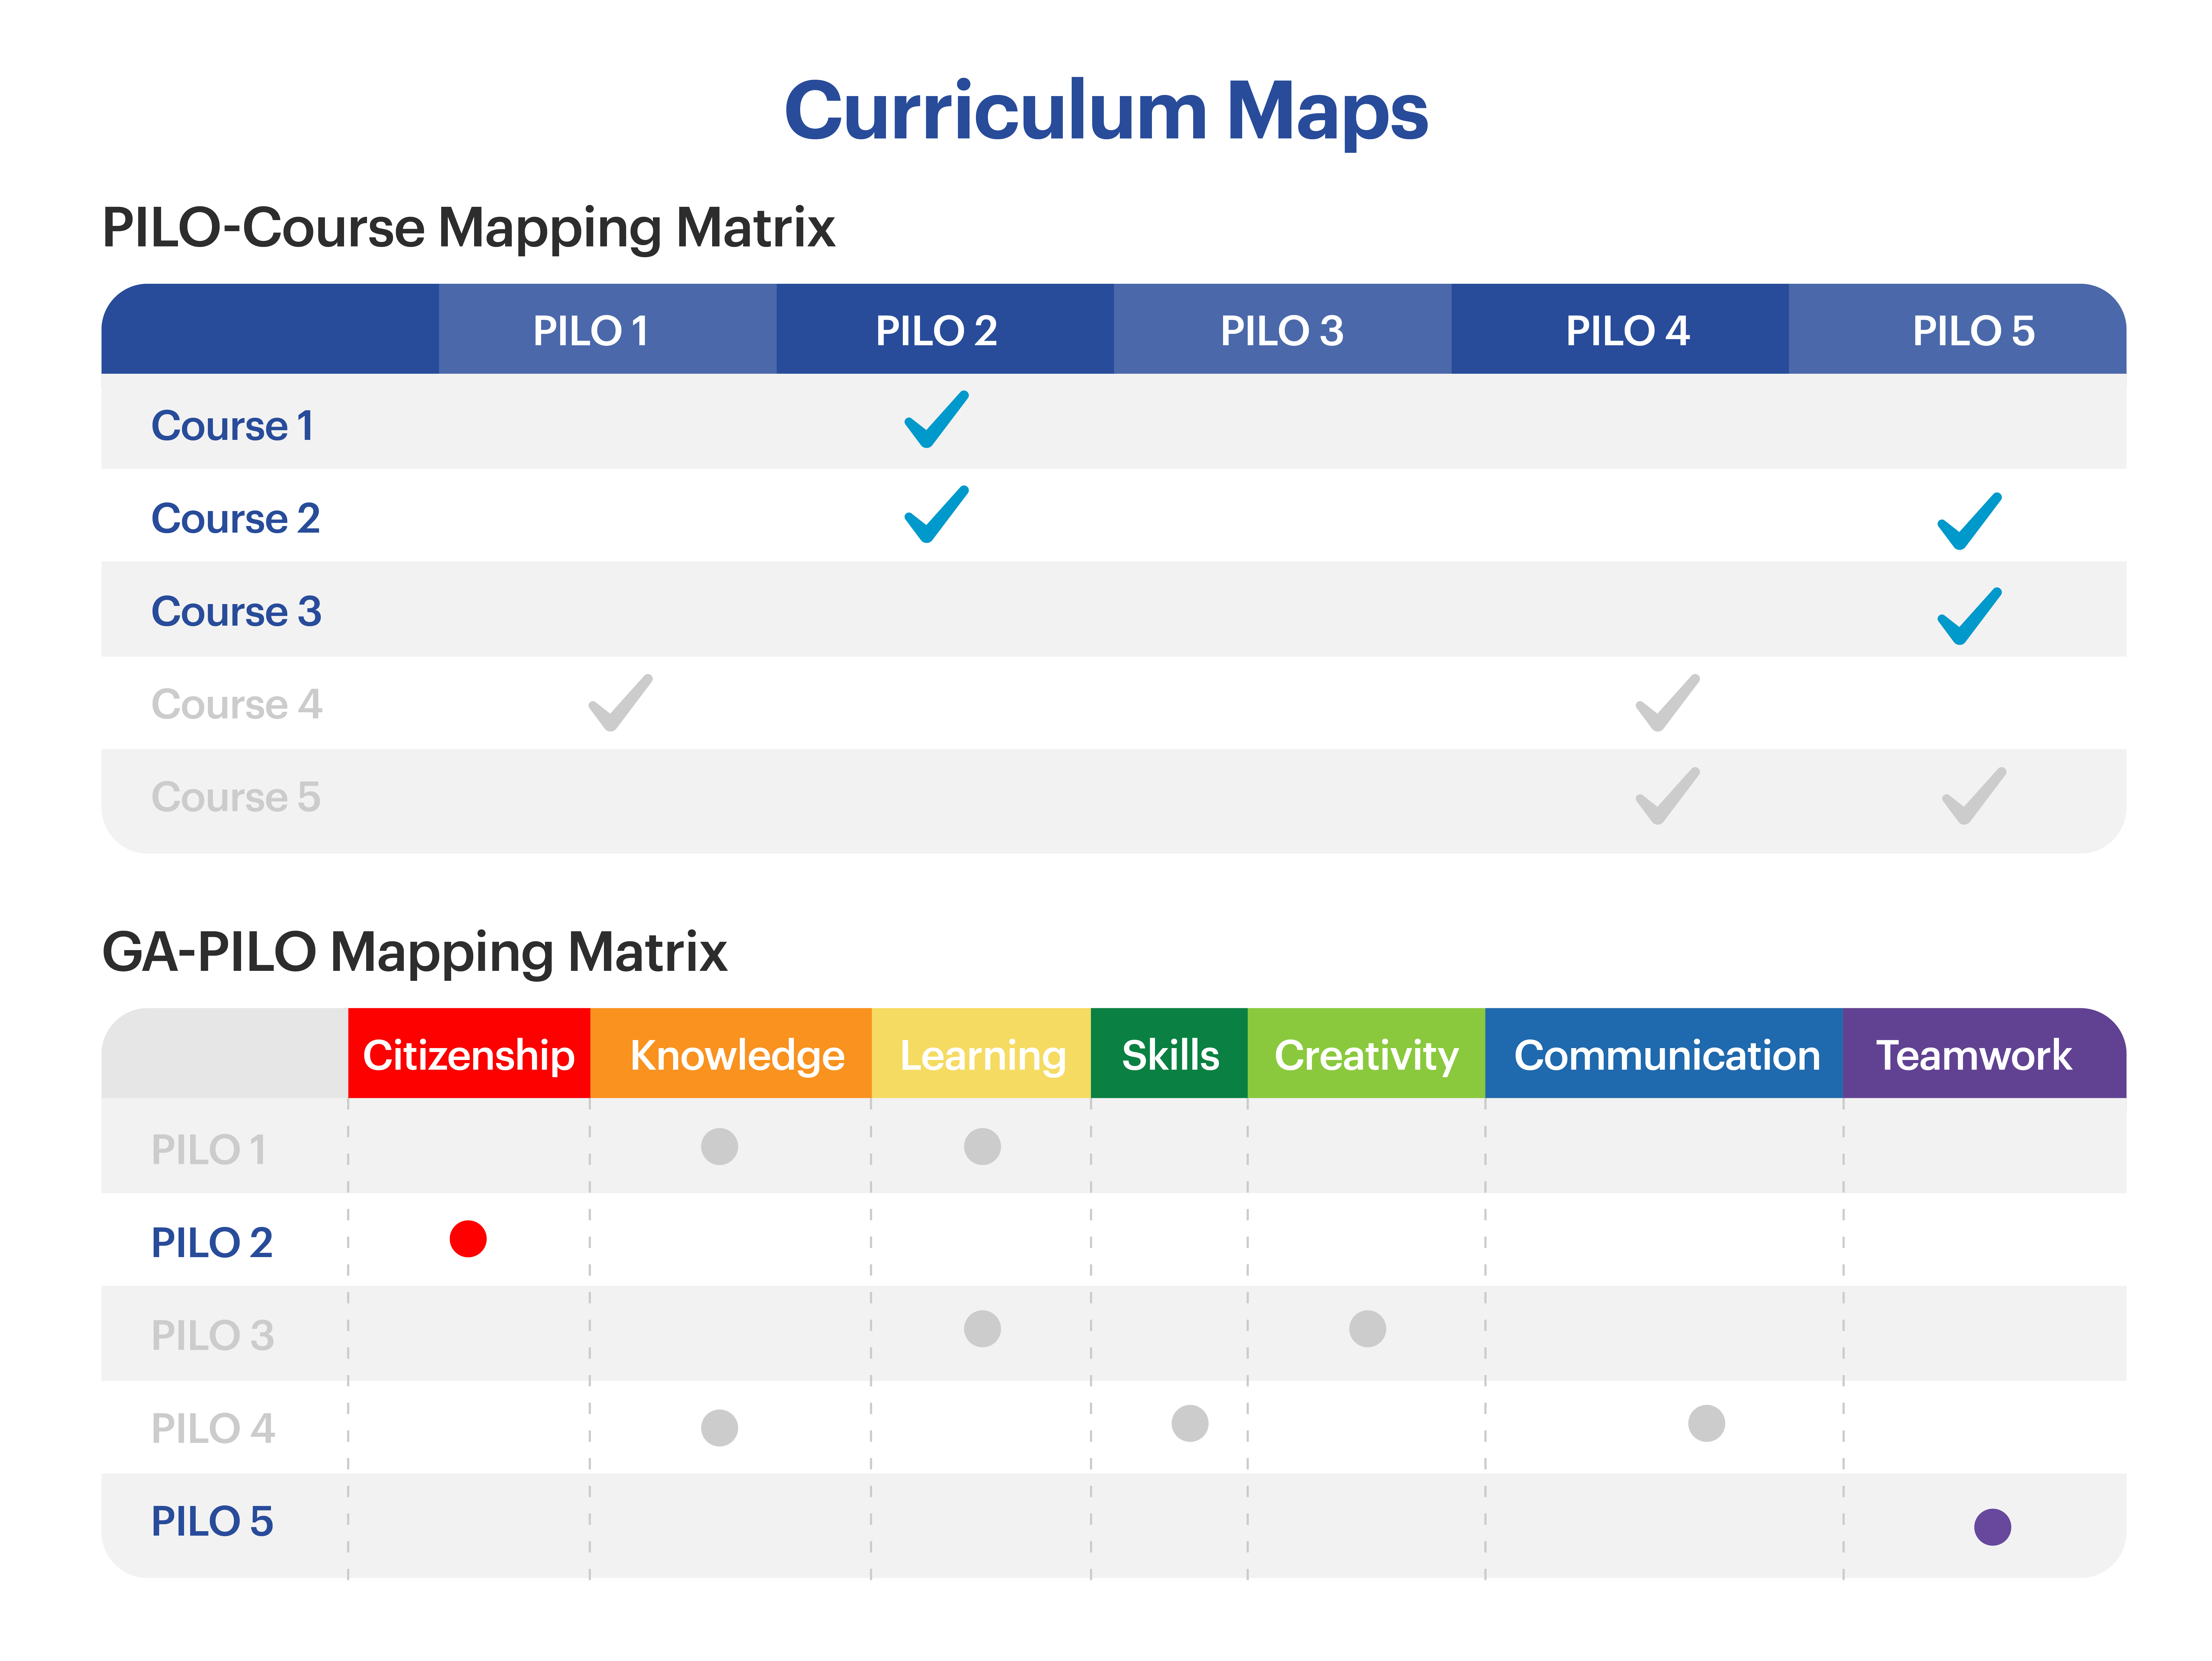 Curriculum Maps for PILO-Course and GA-PILO 